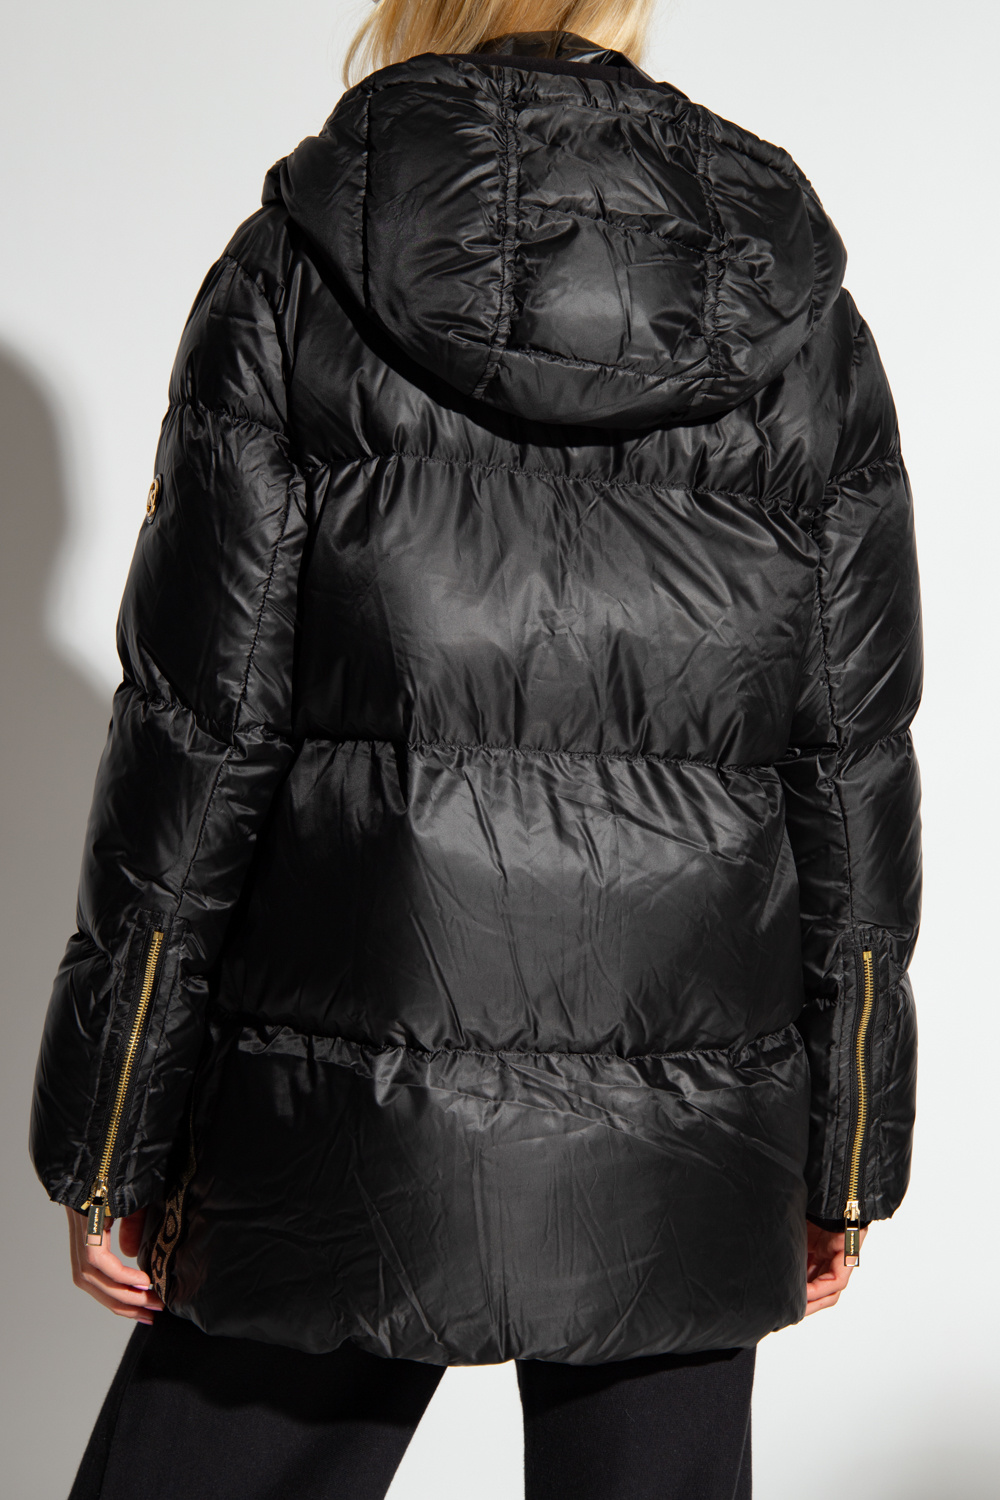 Michael Kors Puffer Jackets for Women for sale  eBay